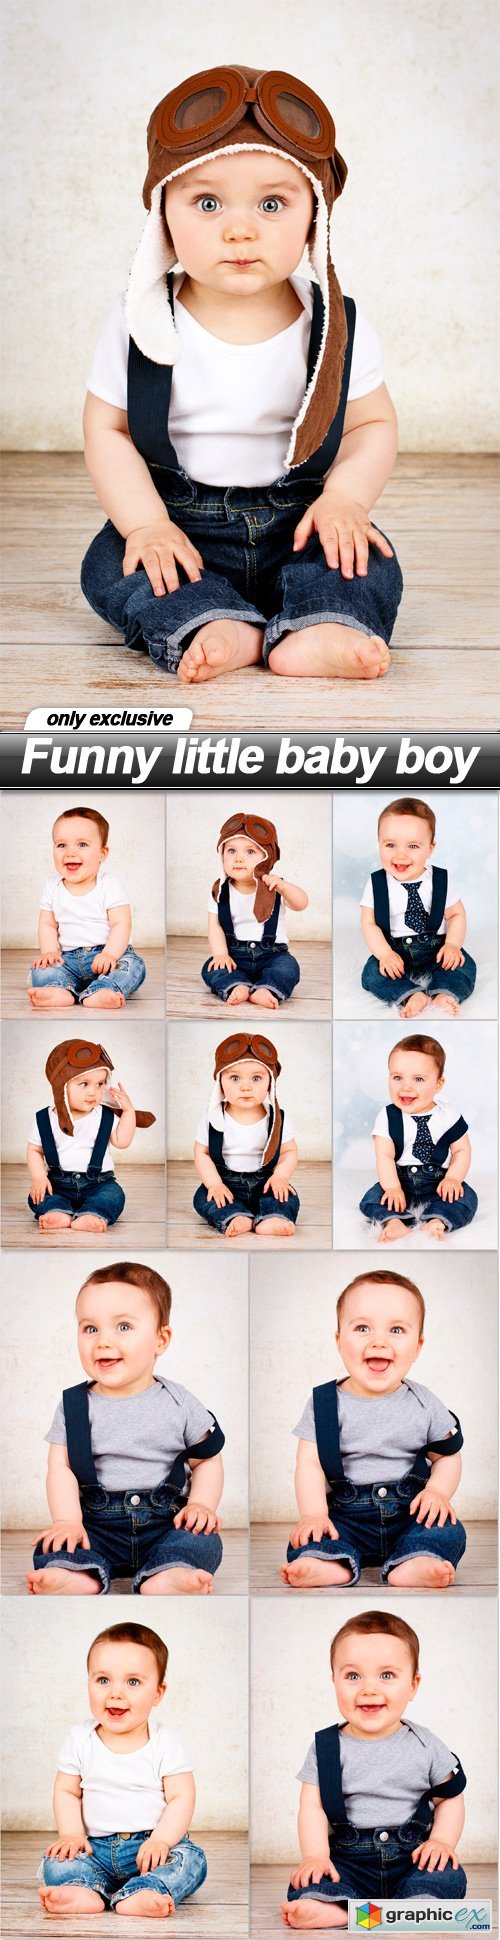 Funny little baby boy - 10 UHQ JPEG